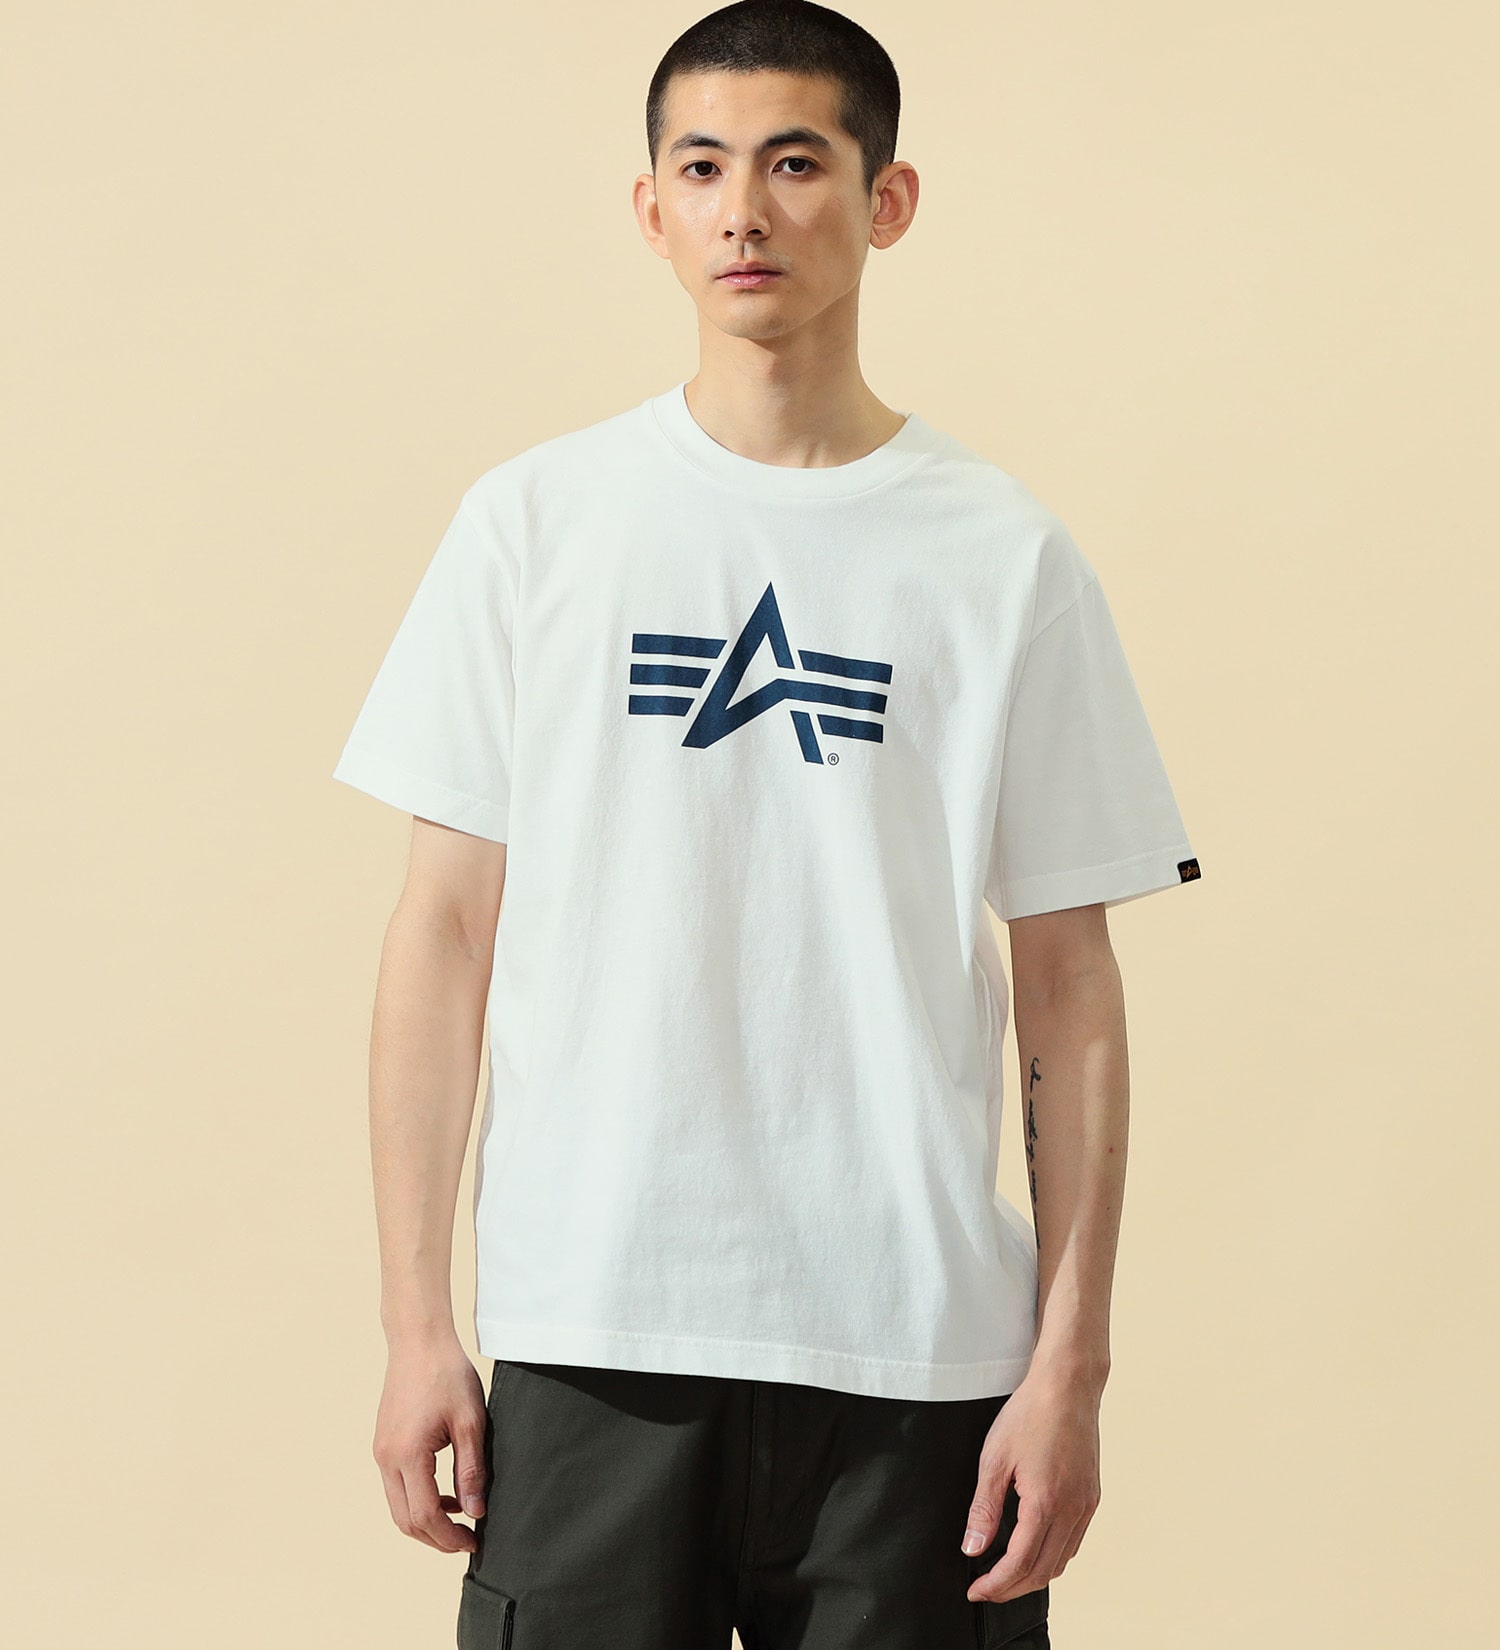 ALPHA(アルファ)のAマークロゴプリントTシャツ 半袖|トップス/Tシャツ/カットソー/メンズ|ホワイト